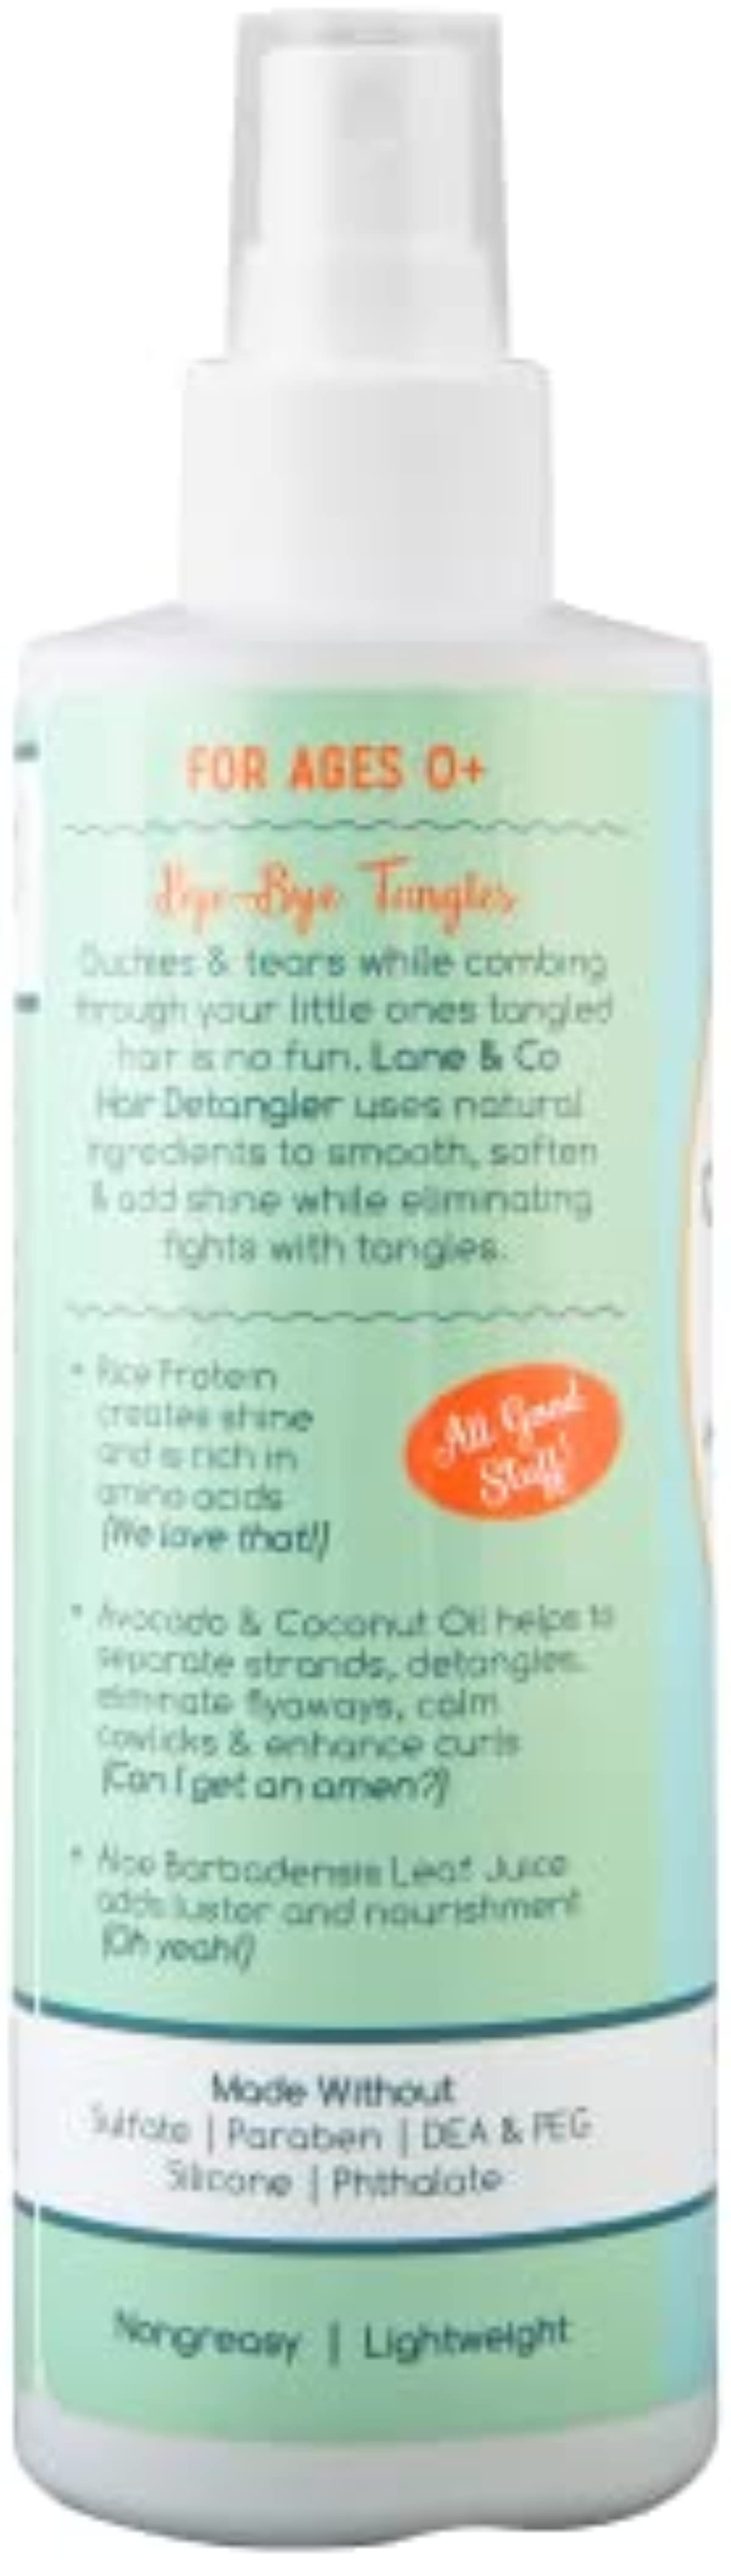 Lane & Co. Conditioning Detangler Spray for Kids & Babies - Leave In Conditioner Spray for Smoothing, Detangling - Vegan, Plant-Based, Child-Safe Formula - Natural Baby Hair Products - 8-oz. Bottle